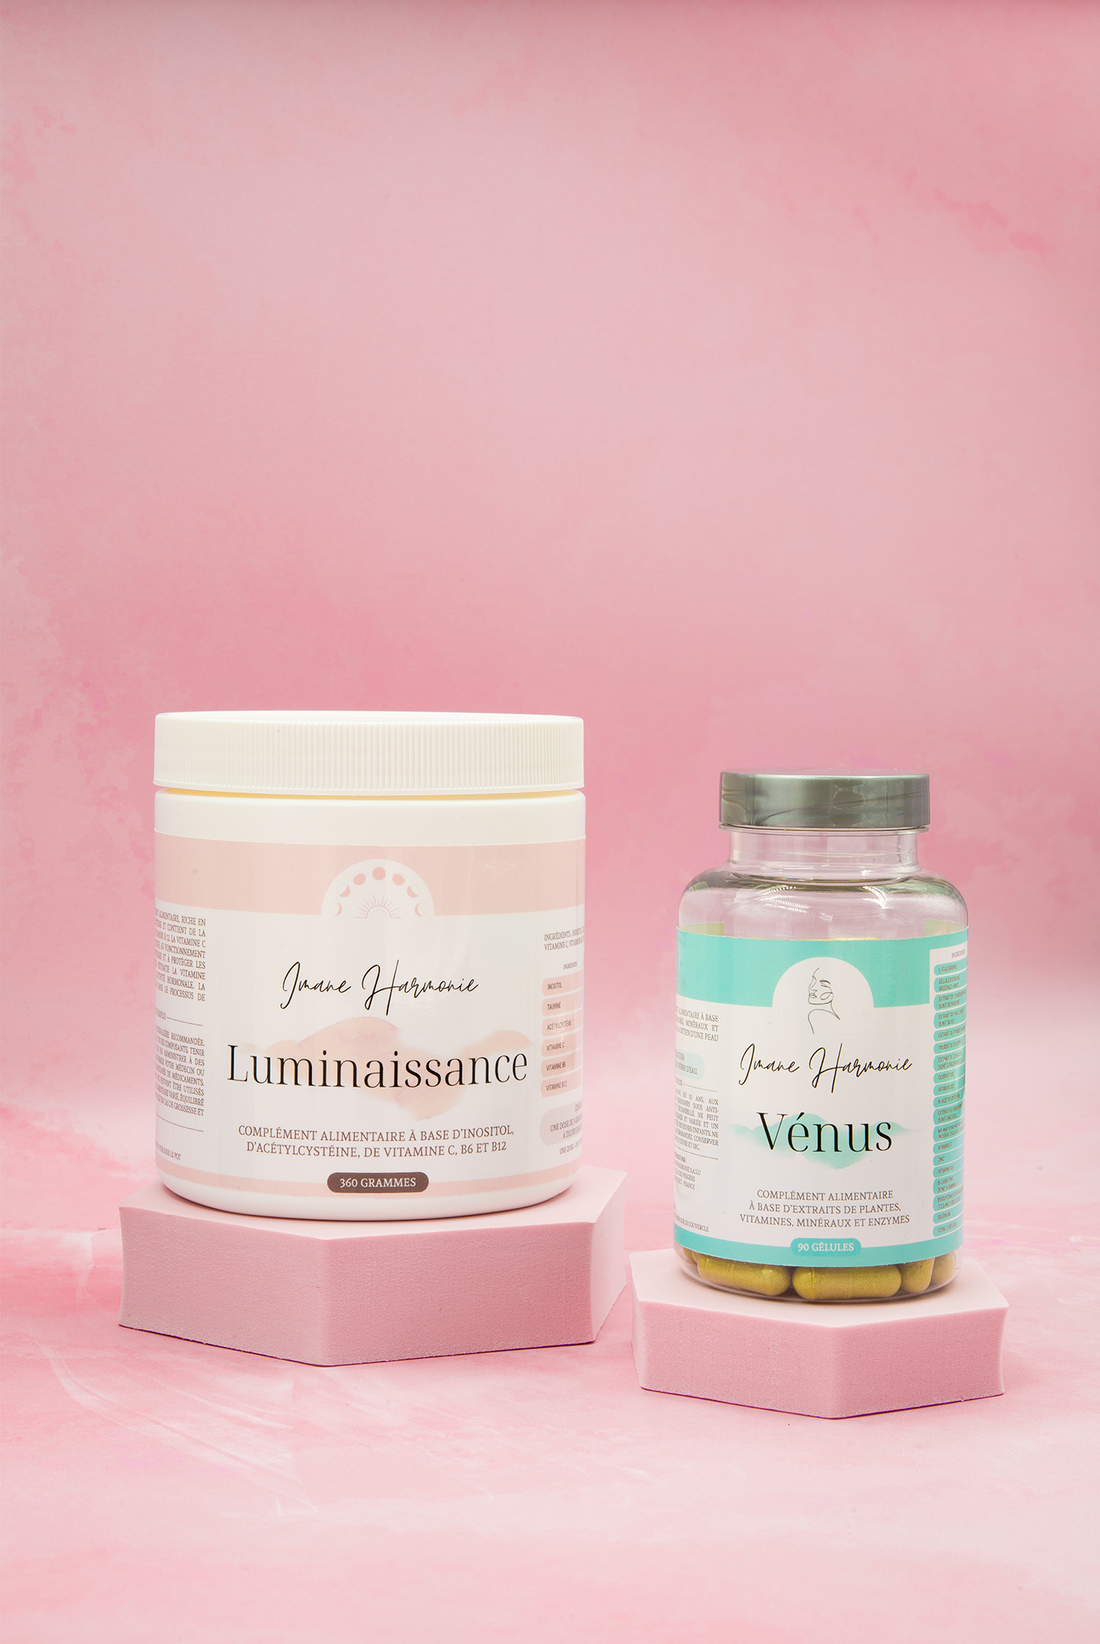 The Luminaissance powdered dietary supplement and Venus in capsules